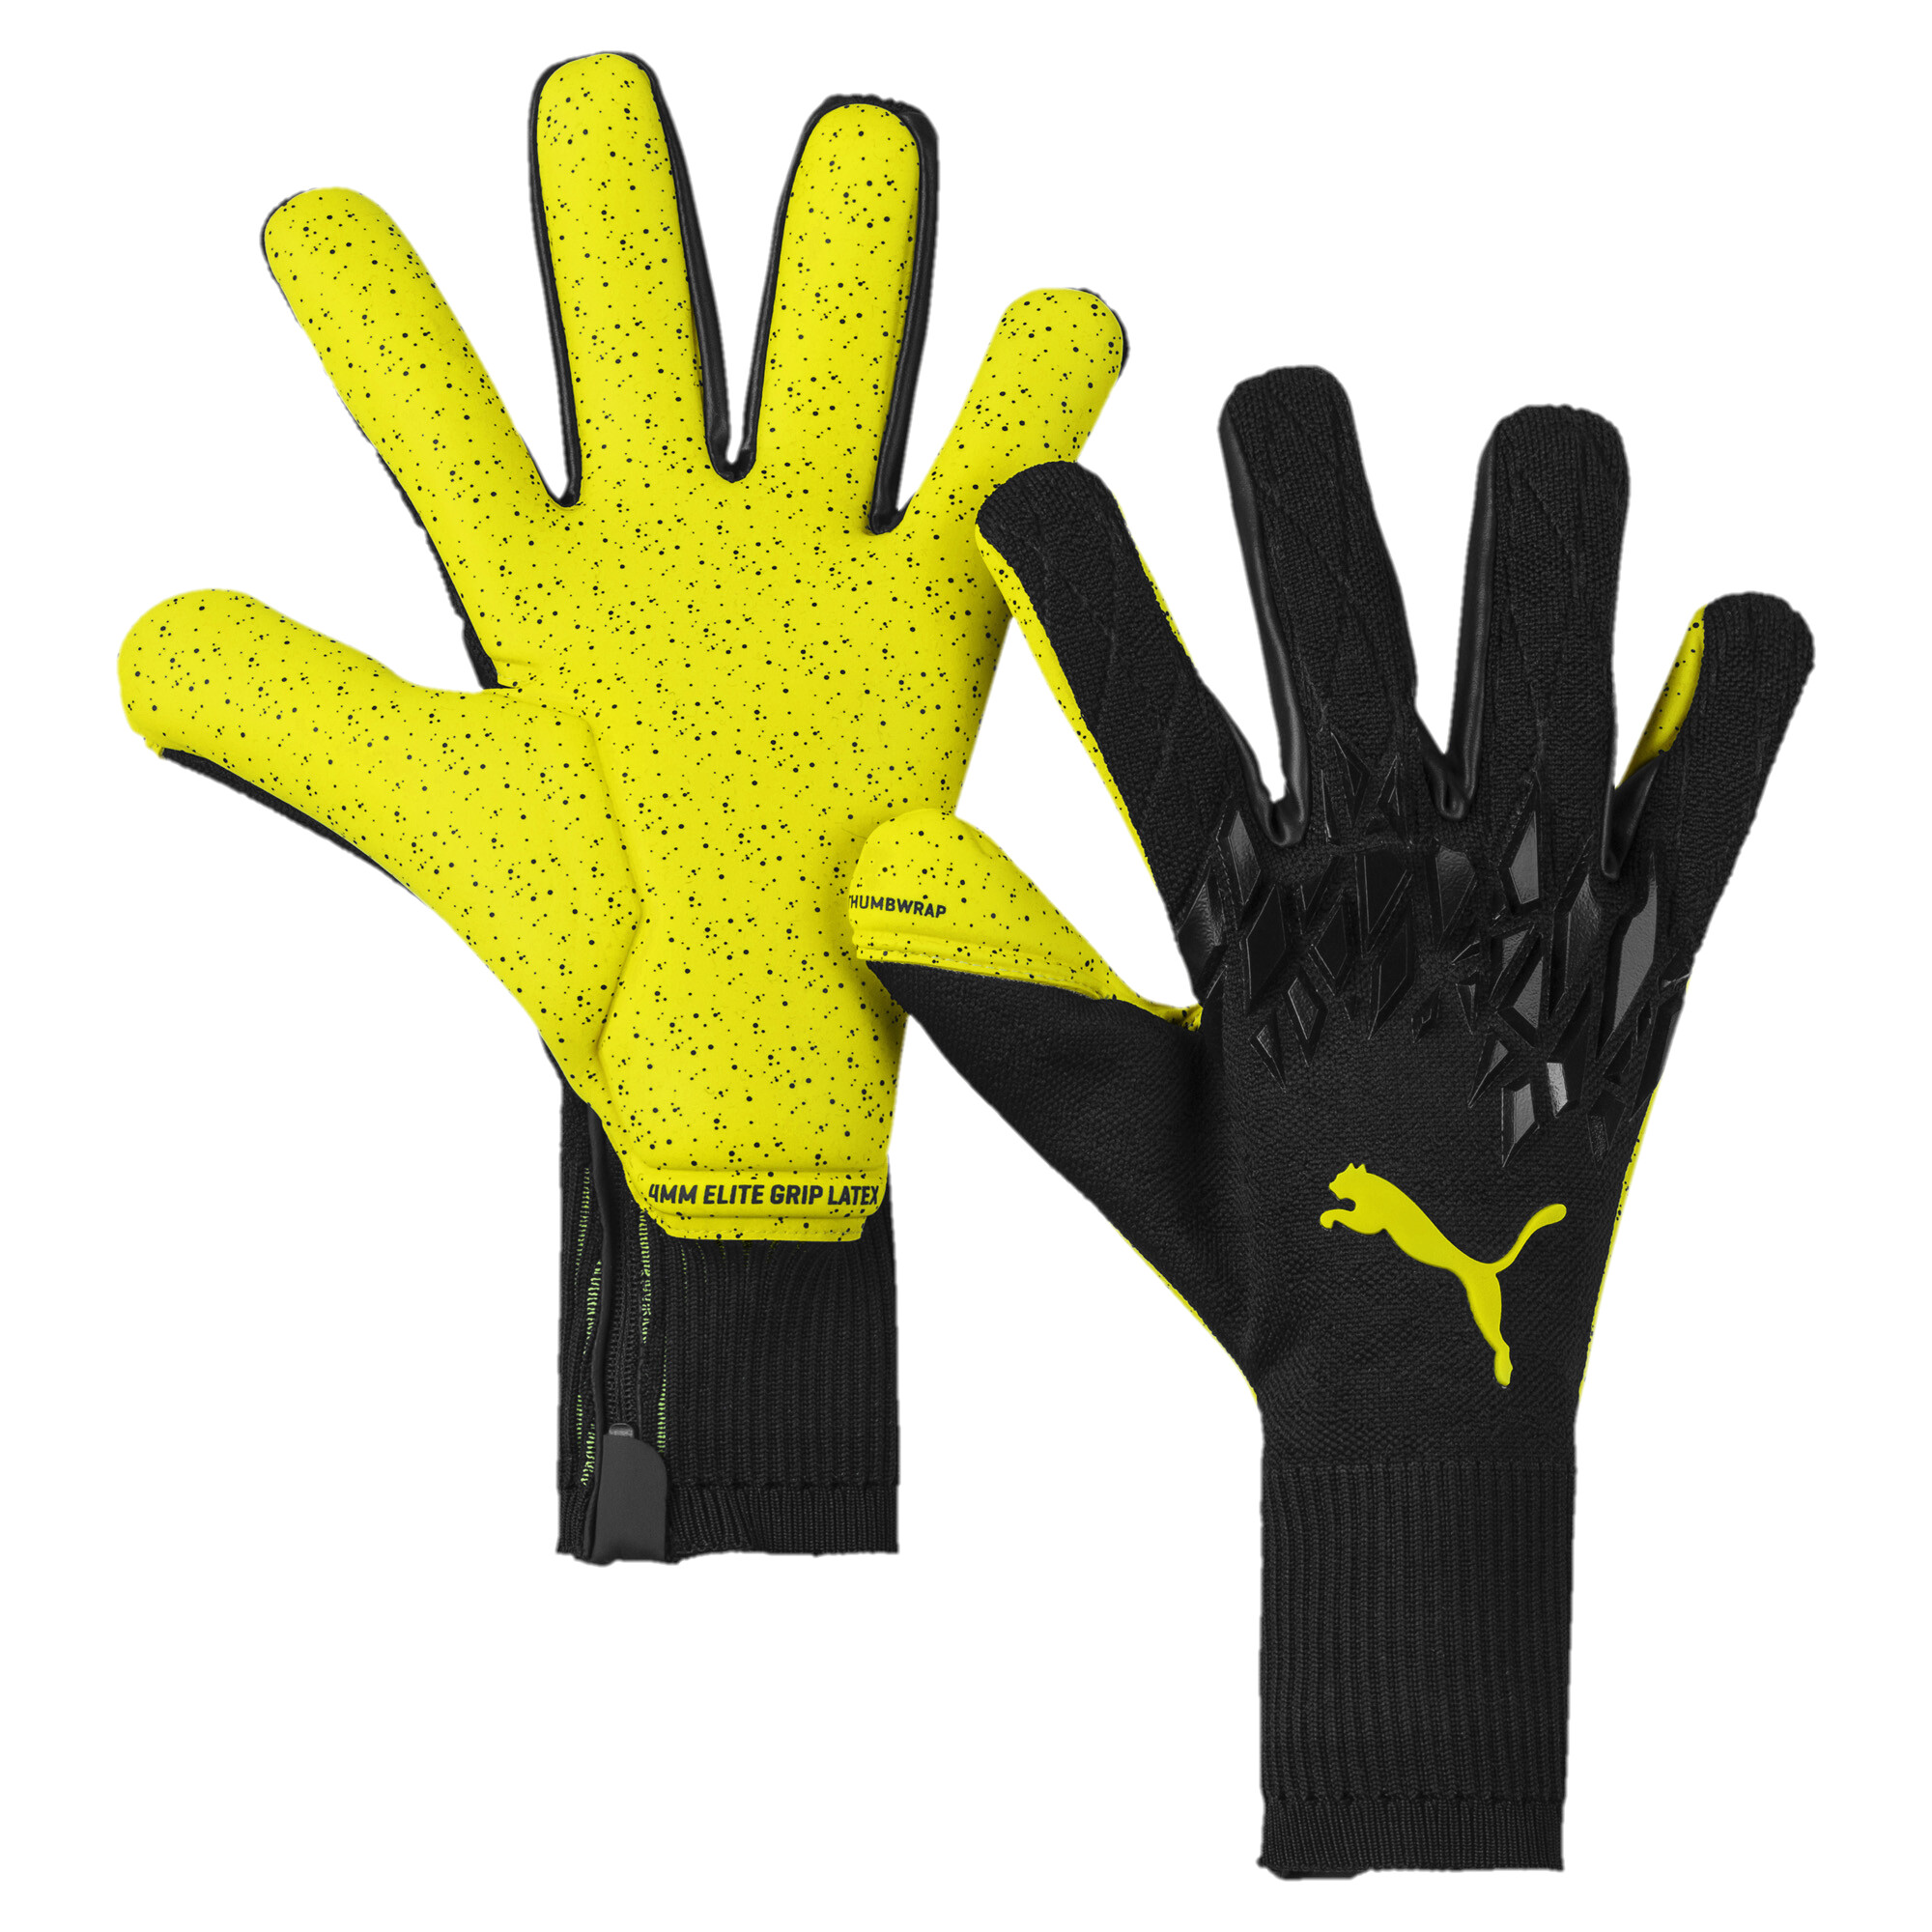 Puma FUTURE Grip 19.1 Football Goalkeeper Gloves, Black, Size 10.5, Accessories